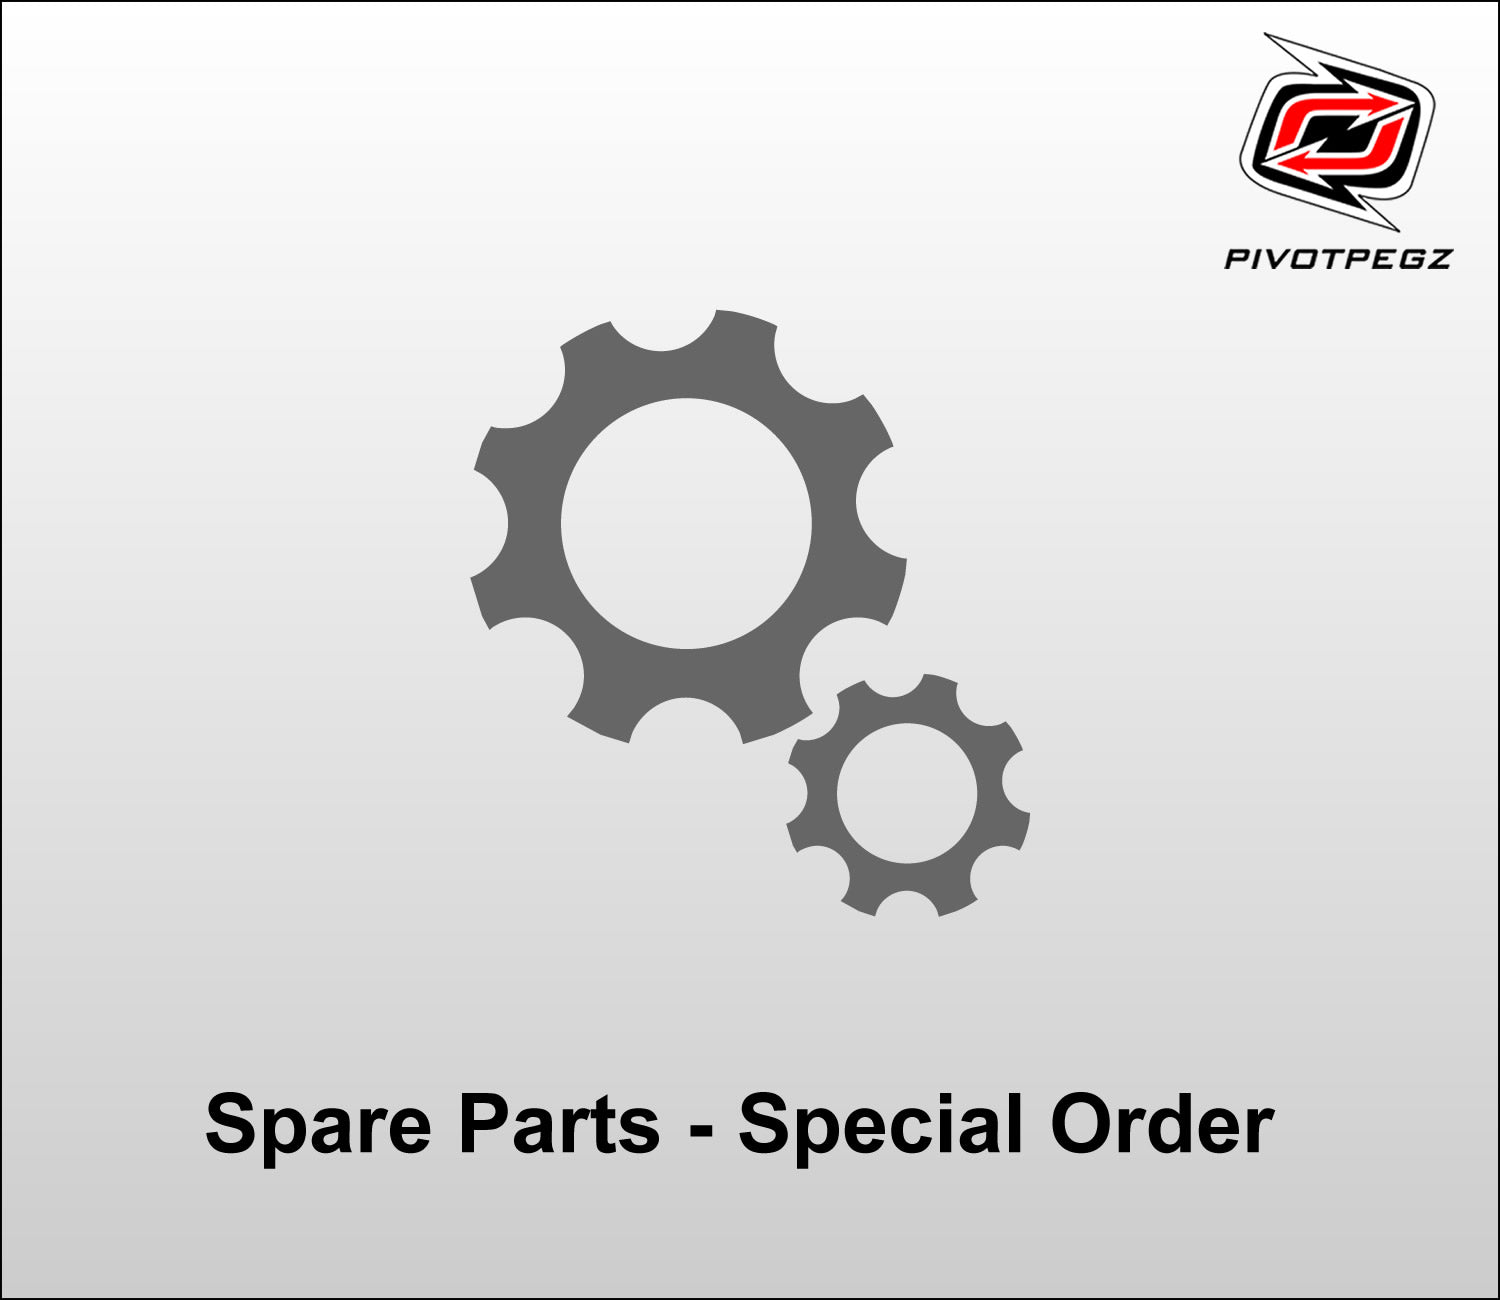 Spare Parts Special Order $100